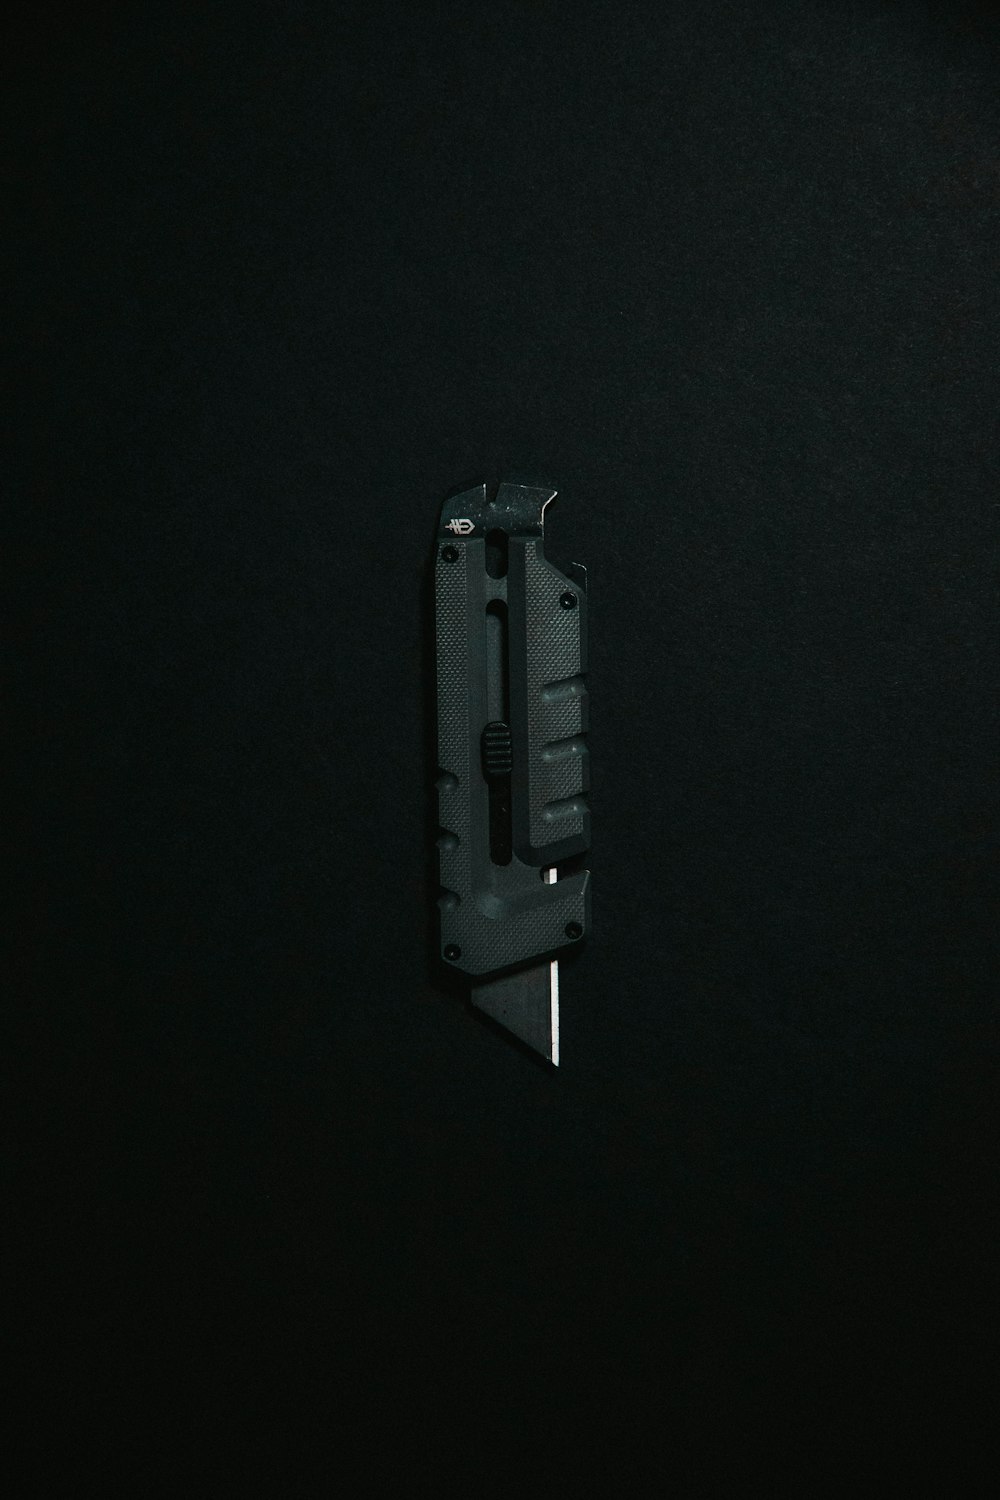 ferramenta de metal preto e cinza